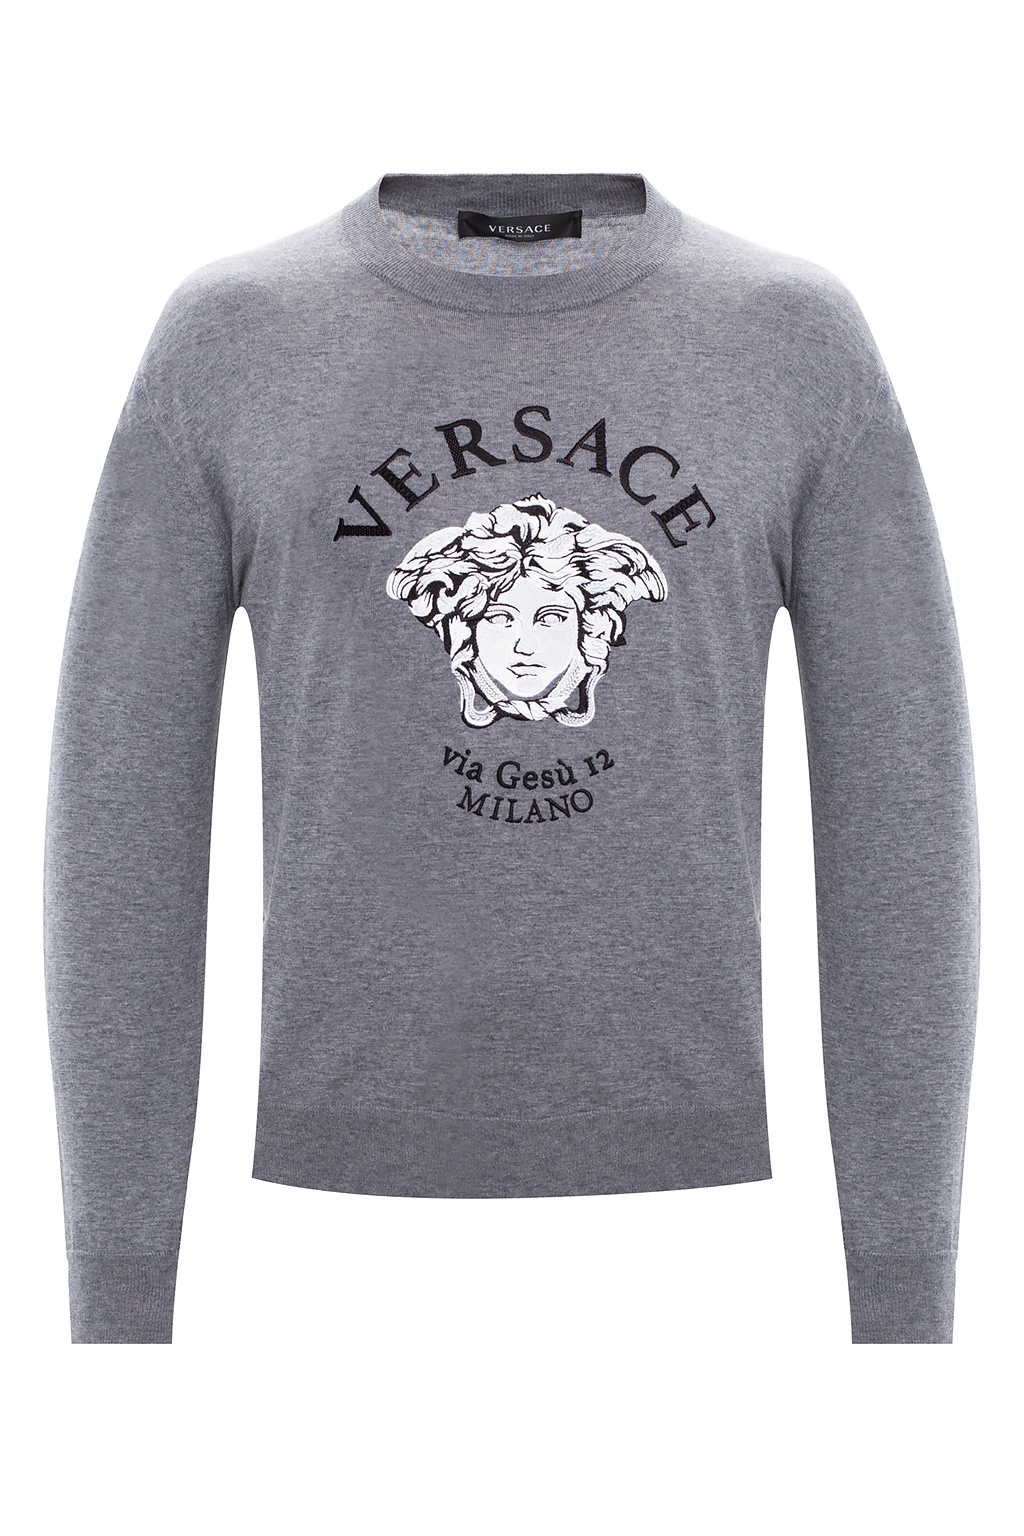 Versace Sweater with logo | Men's Clothing | Vitkac